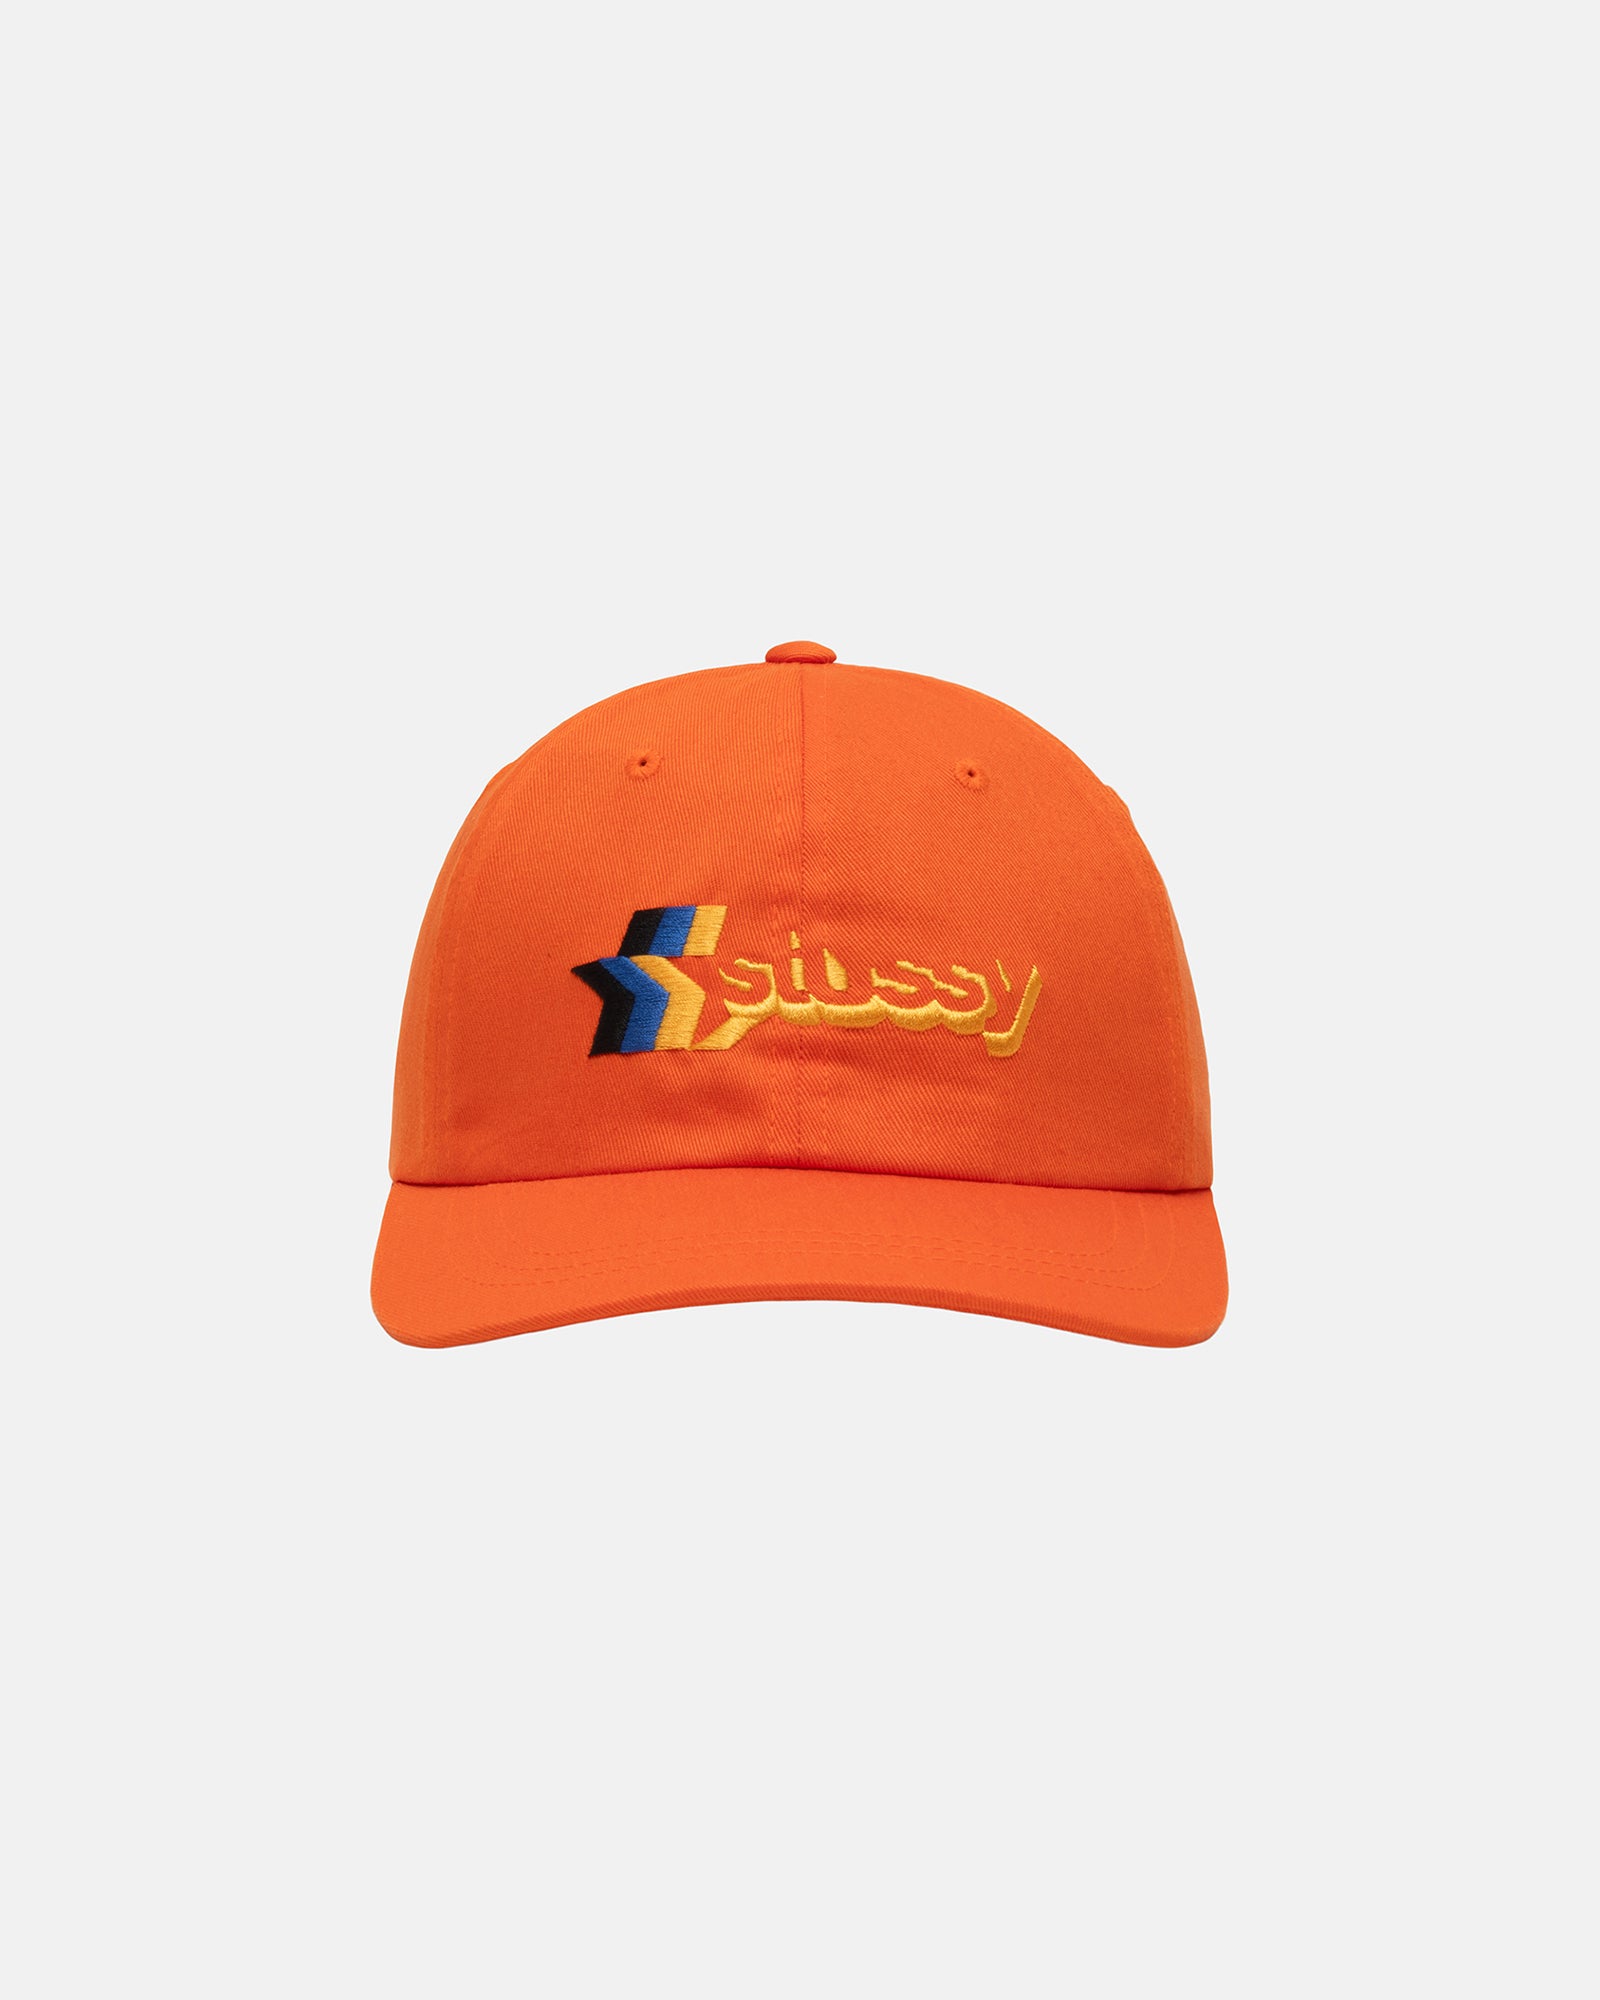 Stüssy Low Pro 3 Star Strapback Orange Headwear